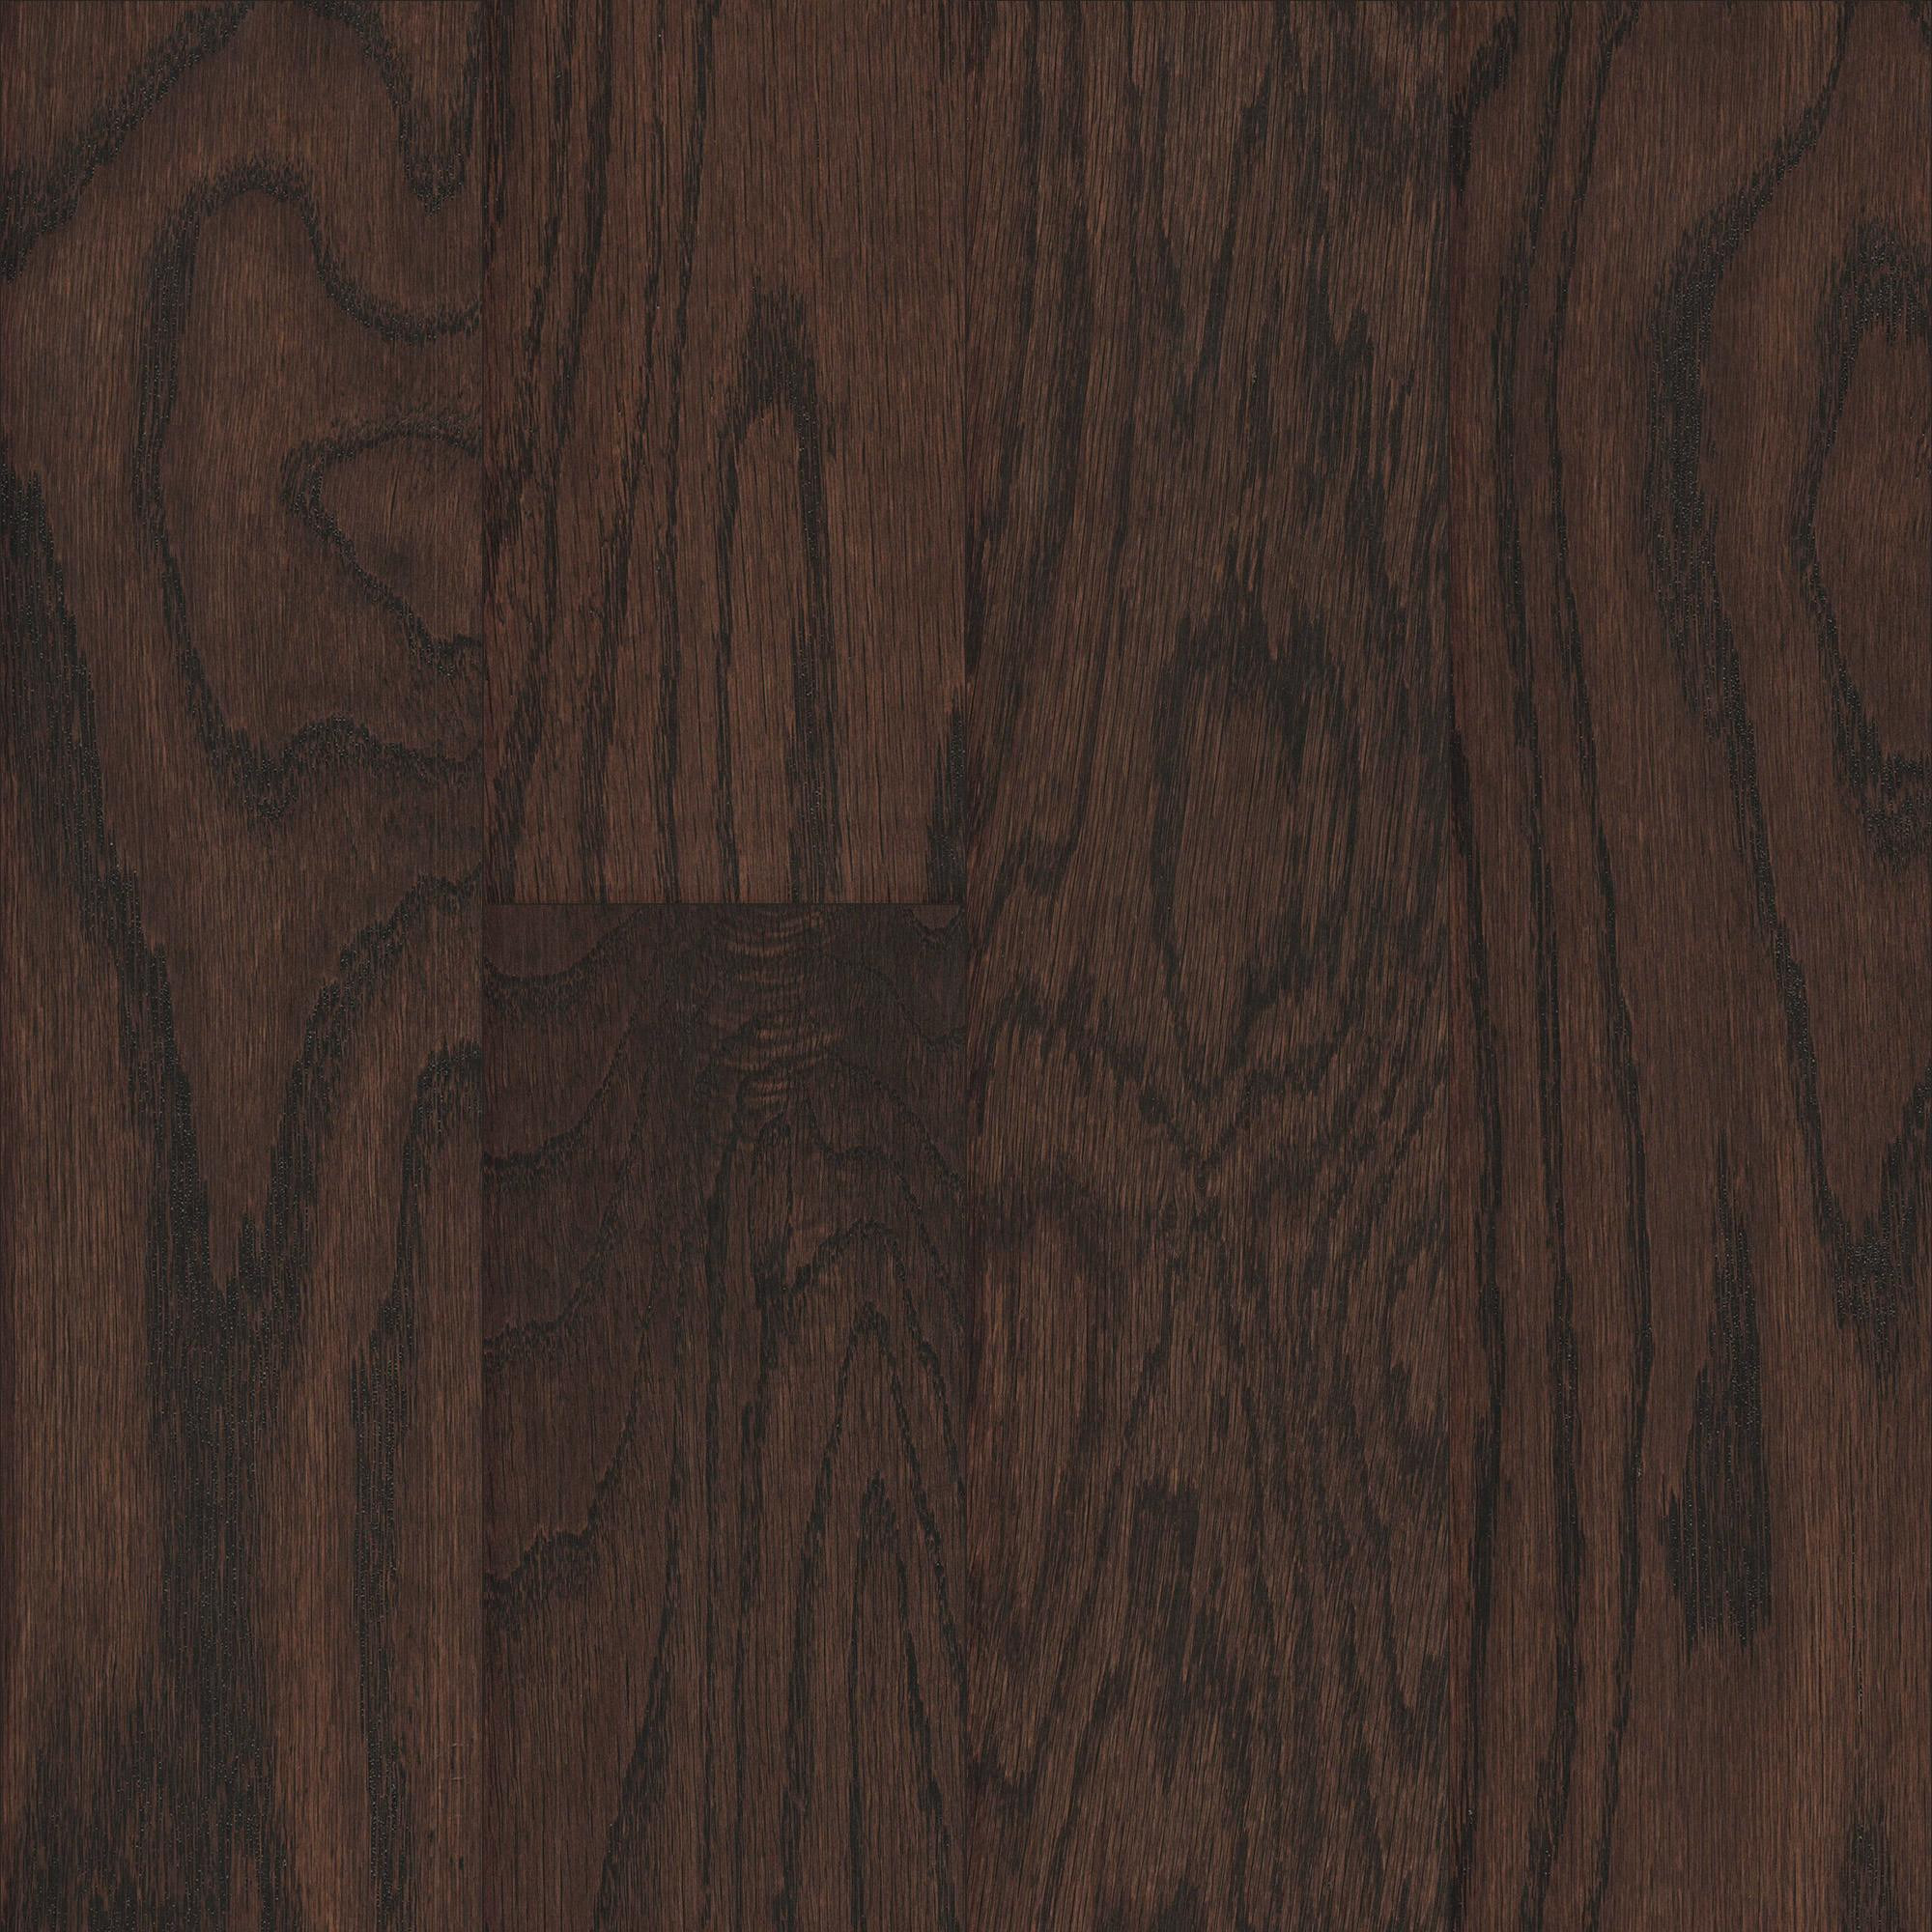 2 1 4 white oak hardwood flooring of mullican ridgecrest oak burnt umber 1 2 thick 5 wide engineered regarding mullican ridgecrest oak burnt umber 1 2 thick 5 wide engineered hardwood flooring